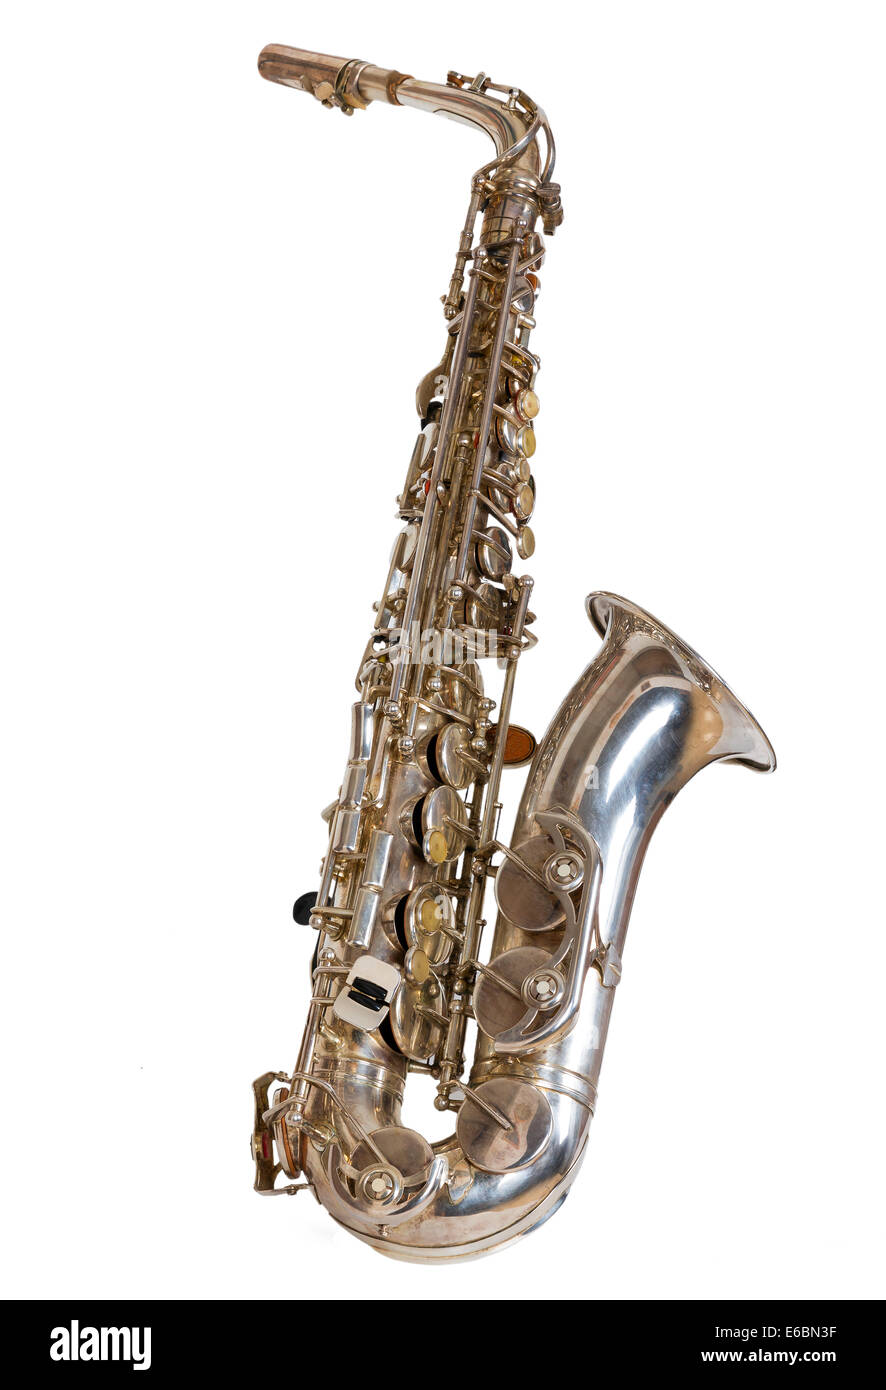 silver saxophone on a white background Stock Photo